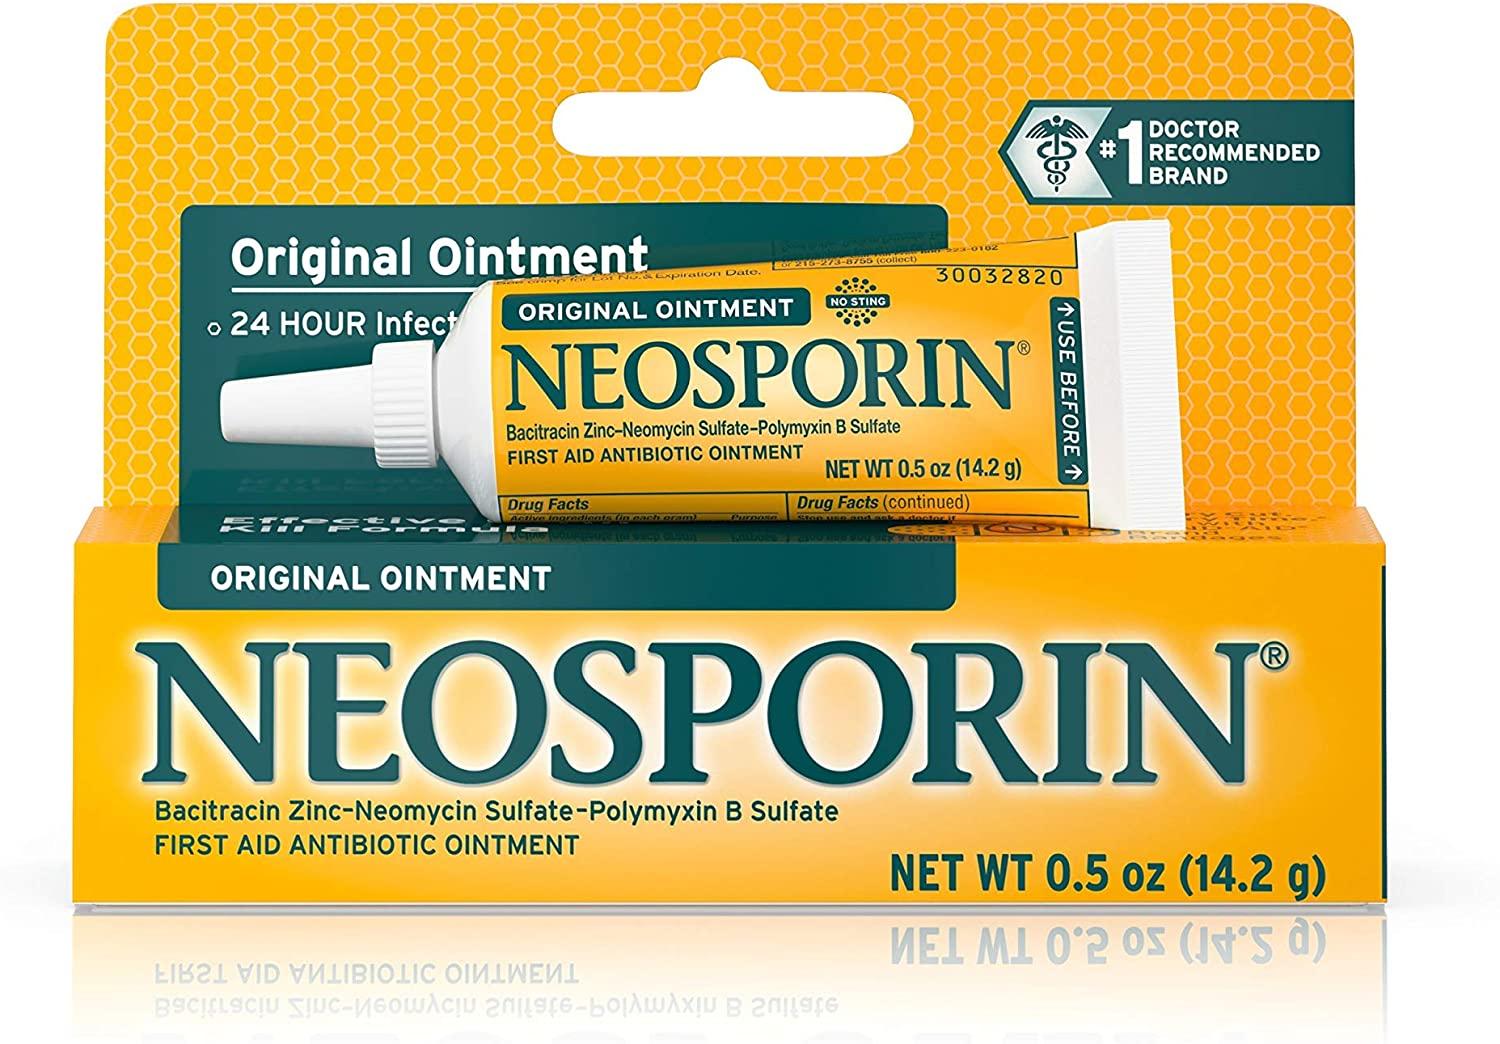 Neosporin Original First Aid Antibiotic Ointment Deals